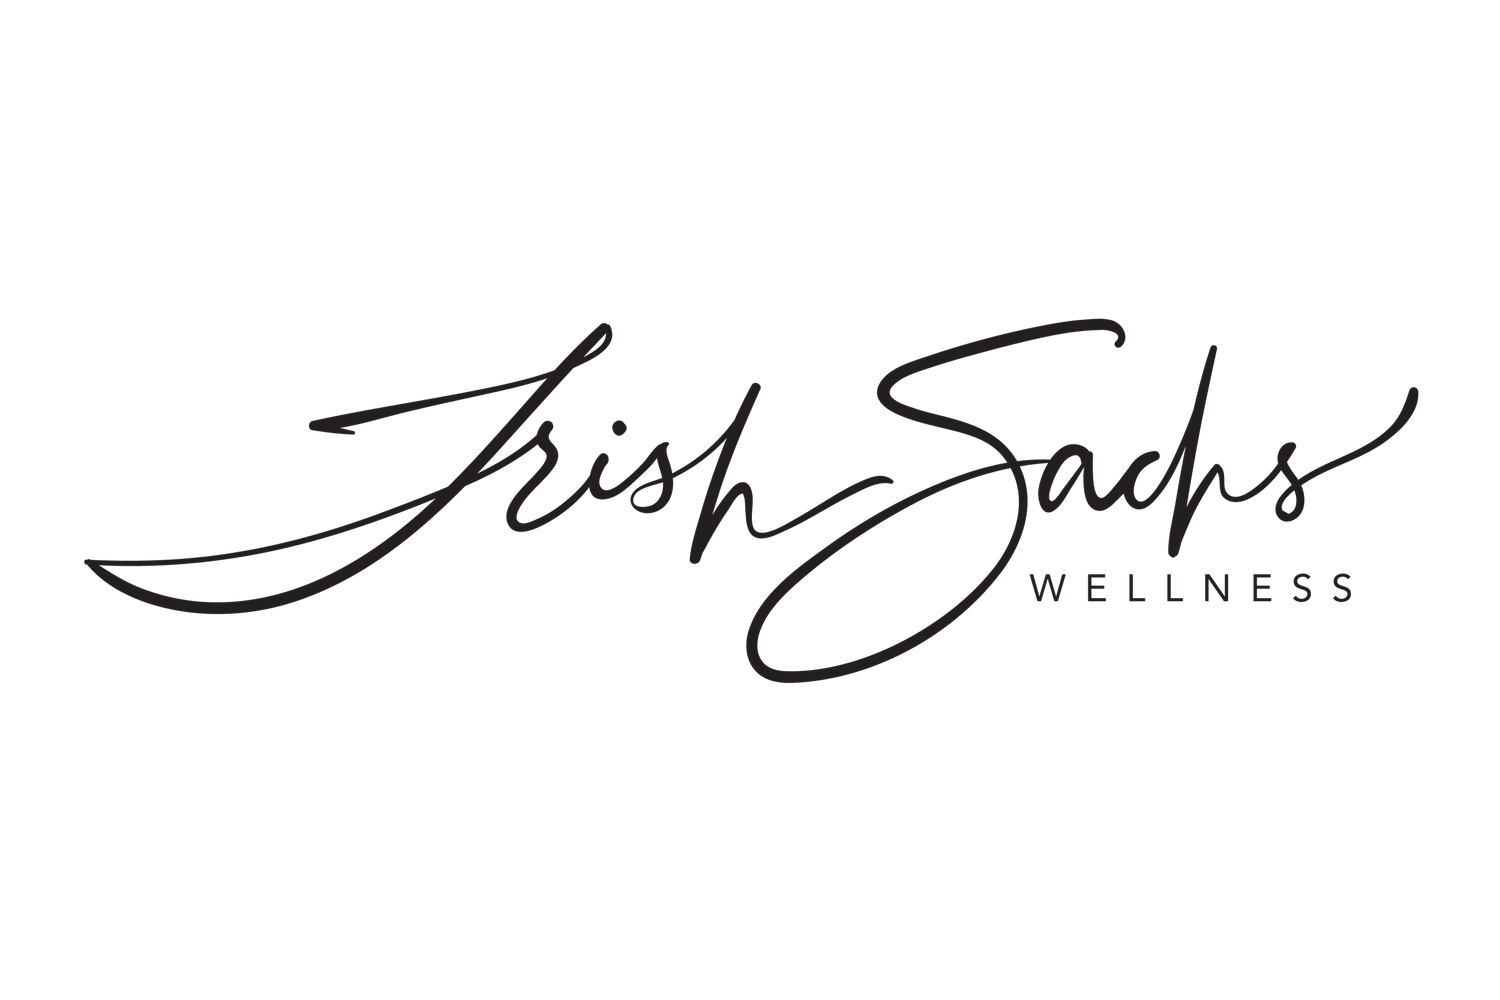 Trish Sachs Wellness